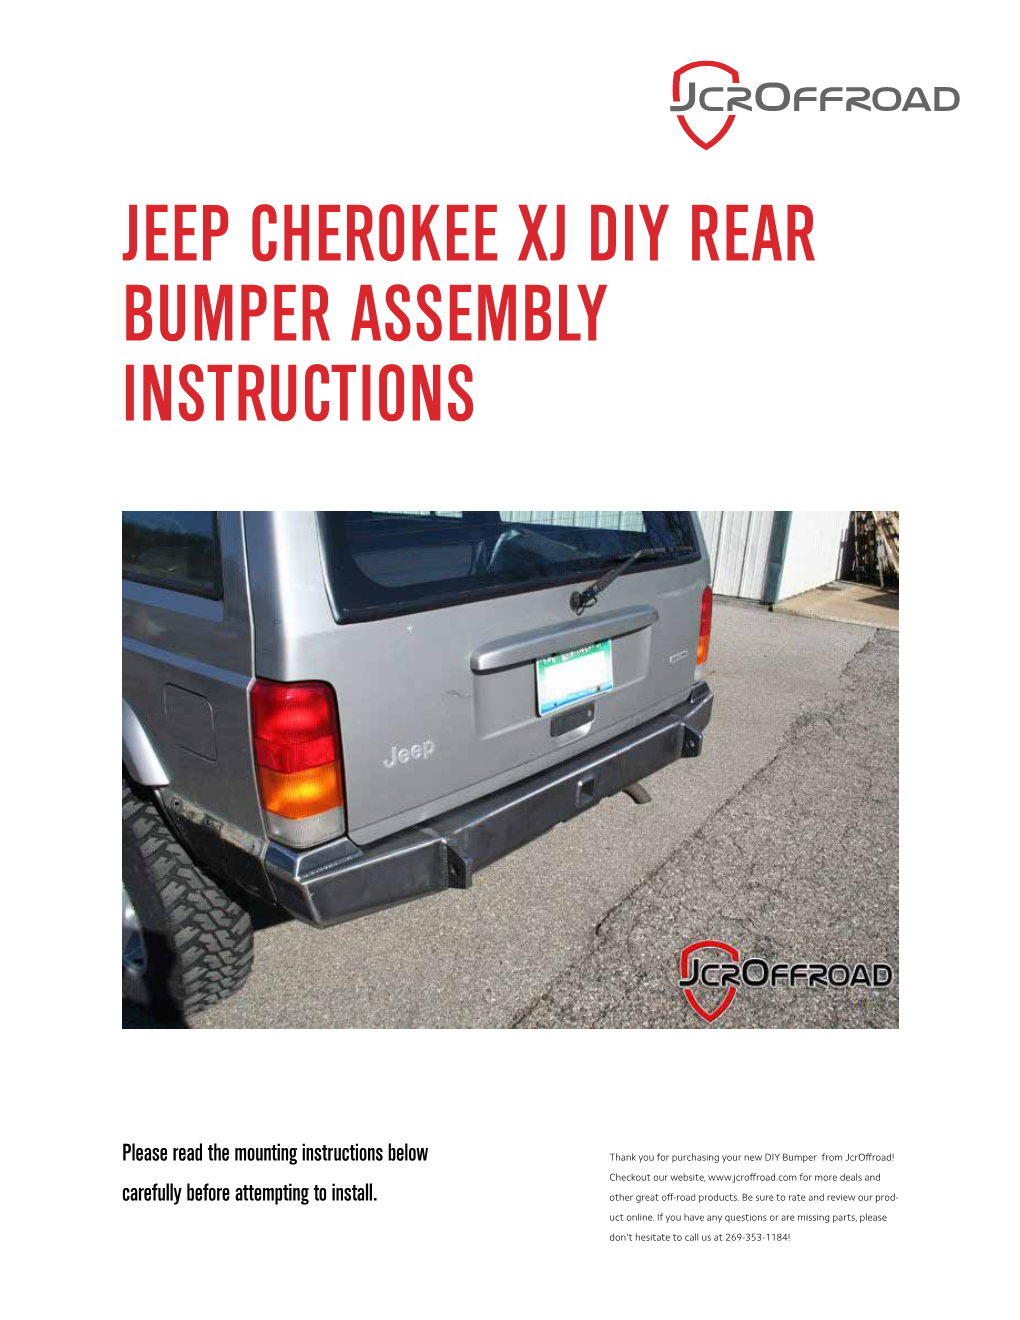 Jeep Cherokee Xj Diy Rear Bumper Assembly Instructions